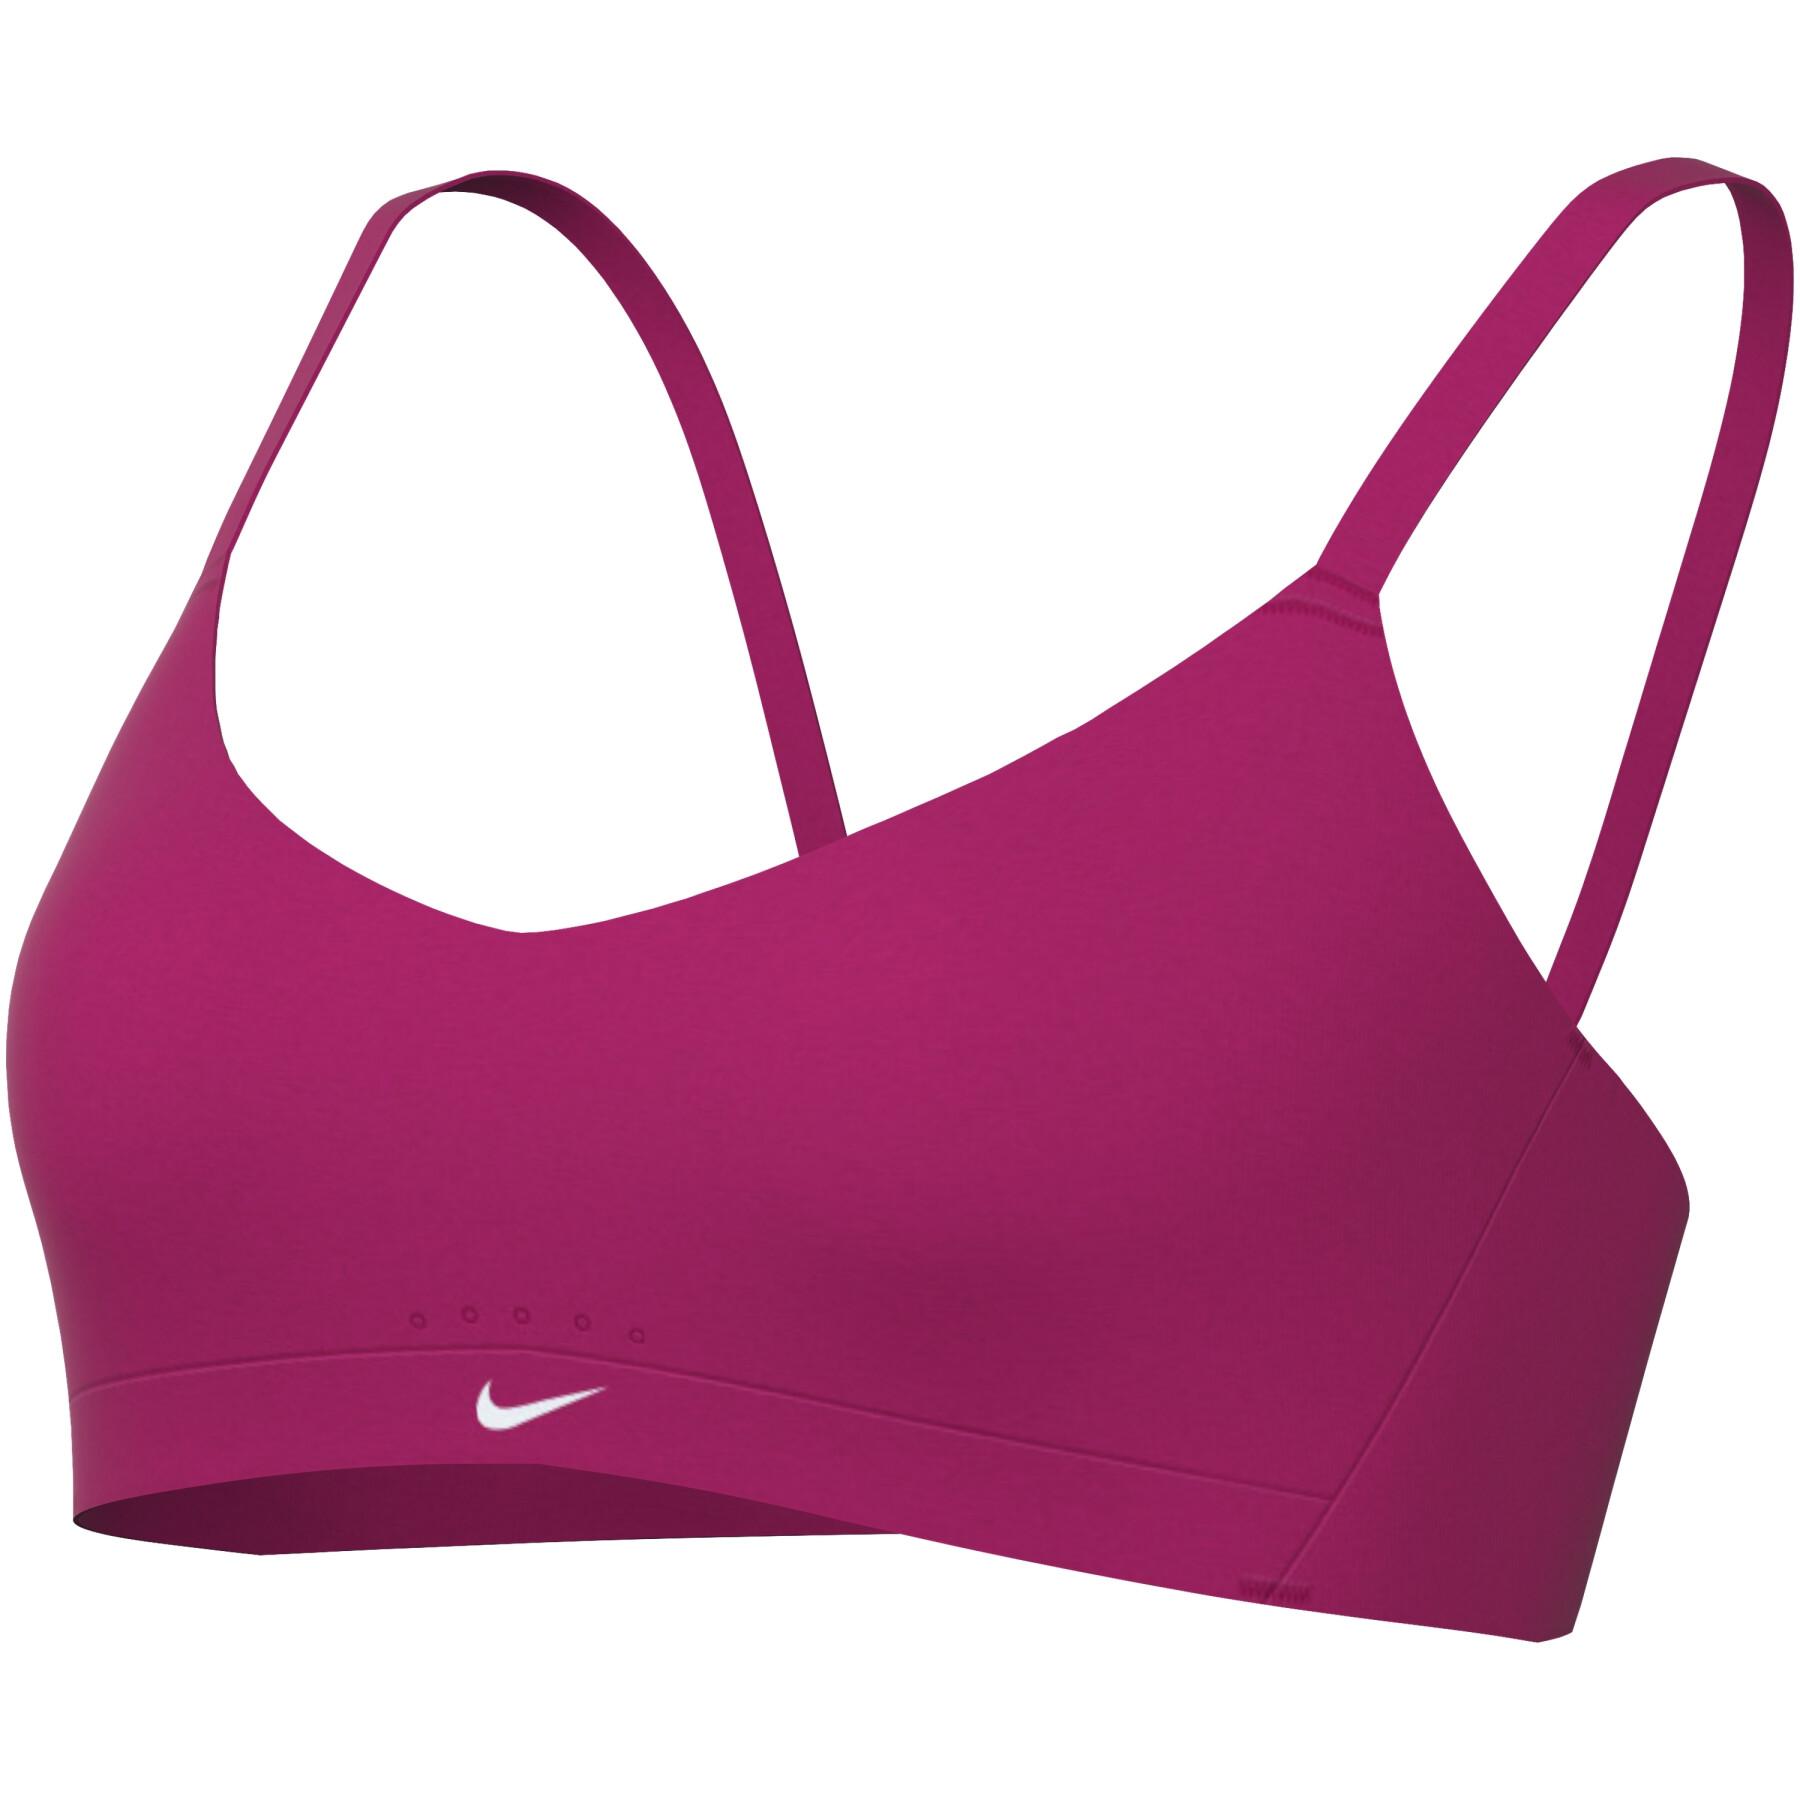 Women's bra Nike Alate Minimalist - Textile - Handball wear